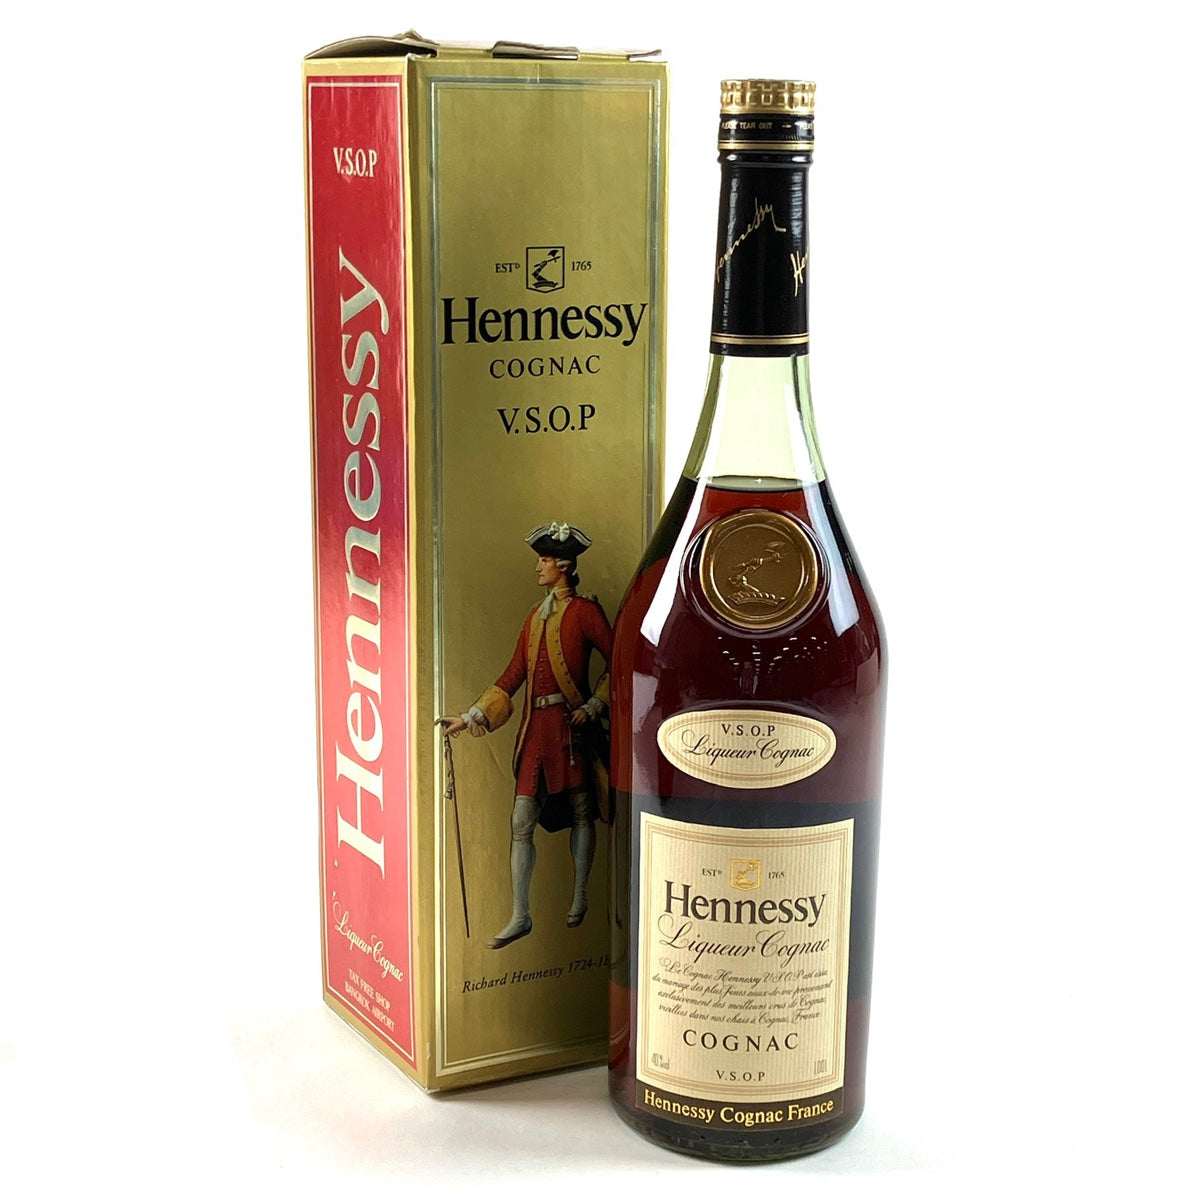 Hennessy ヘネシー V.S.O.P COGNAC コニャック 古酒 - ブランデー